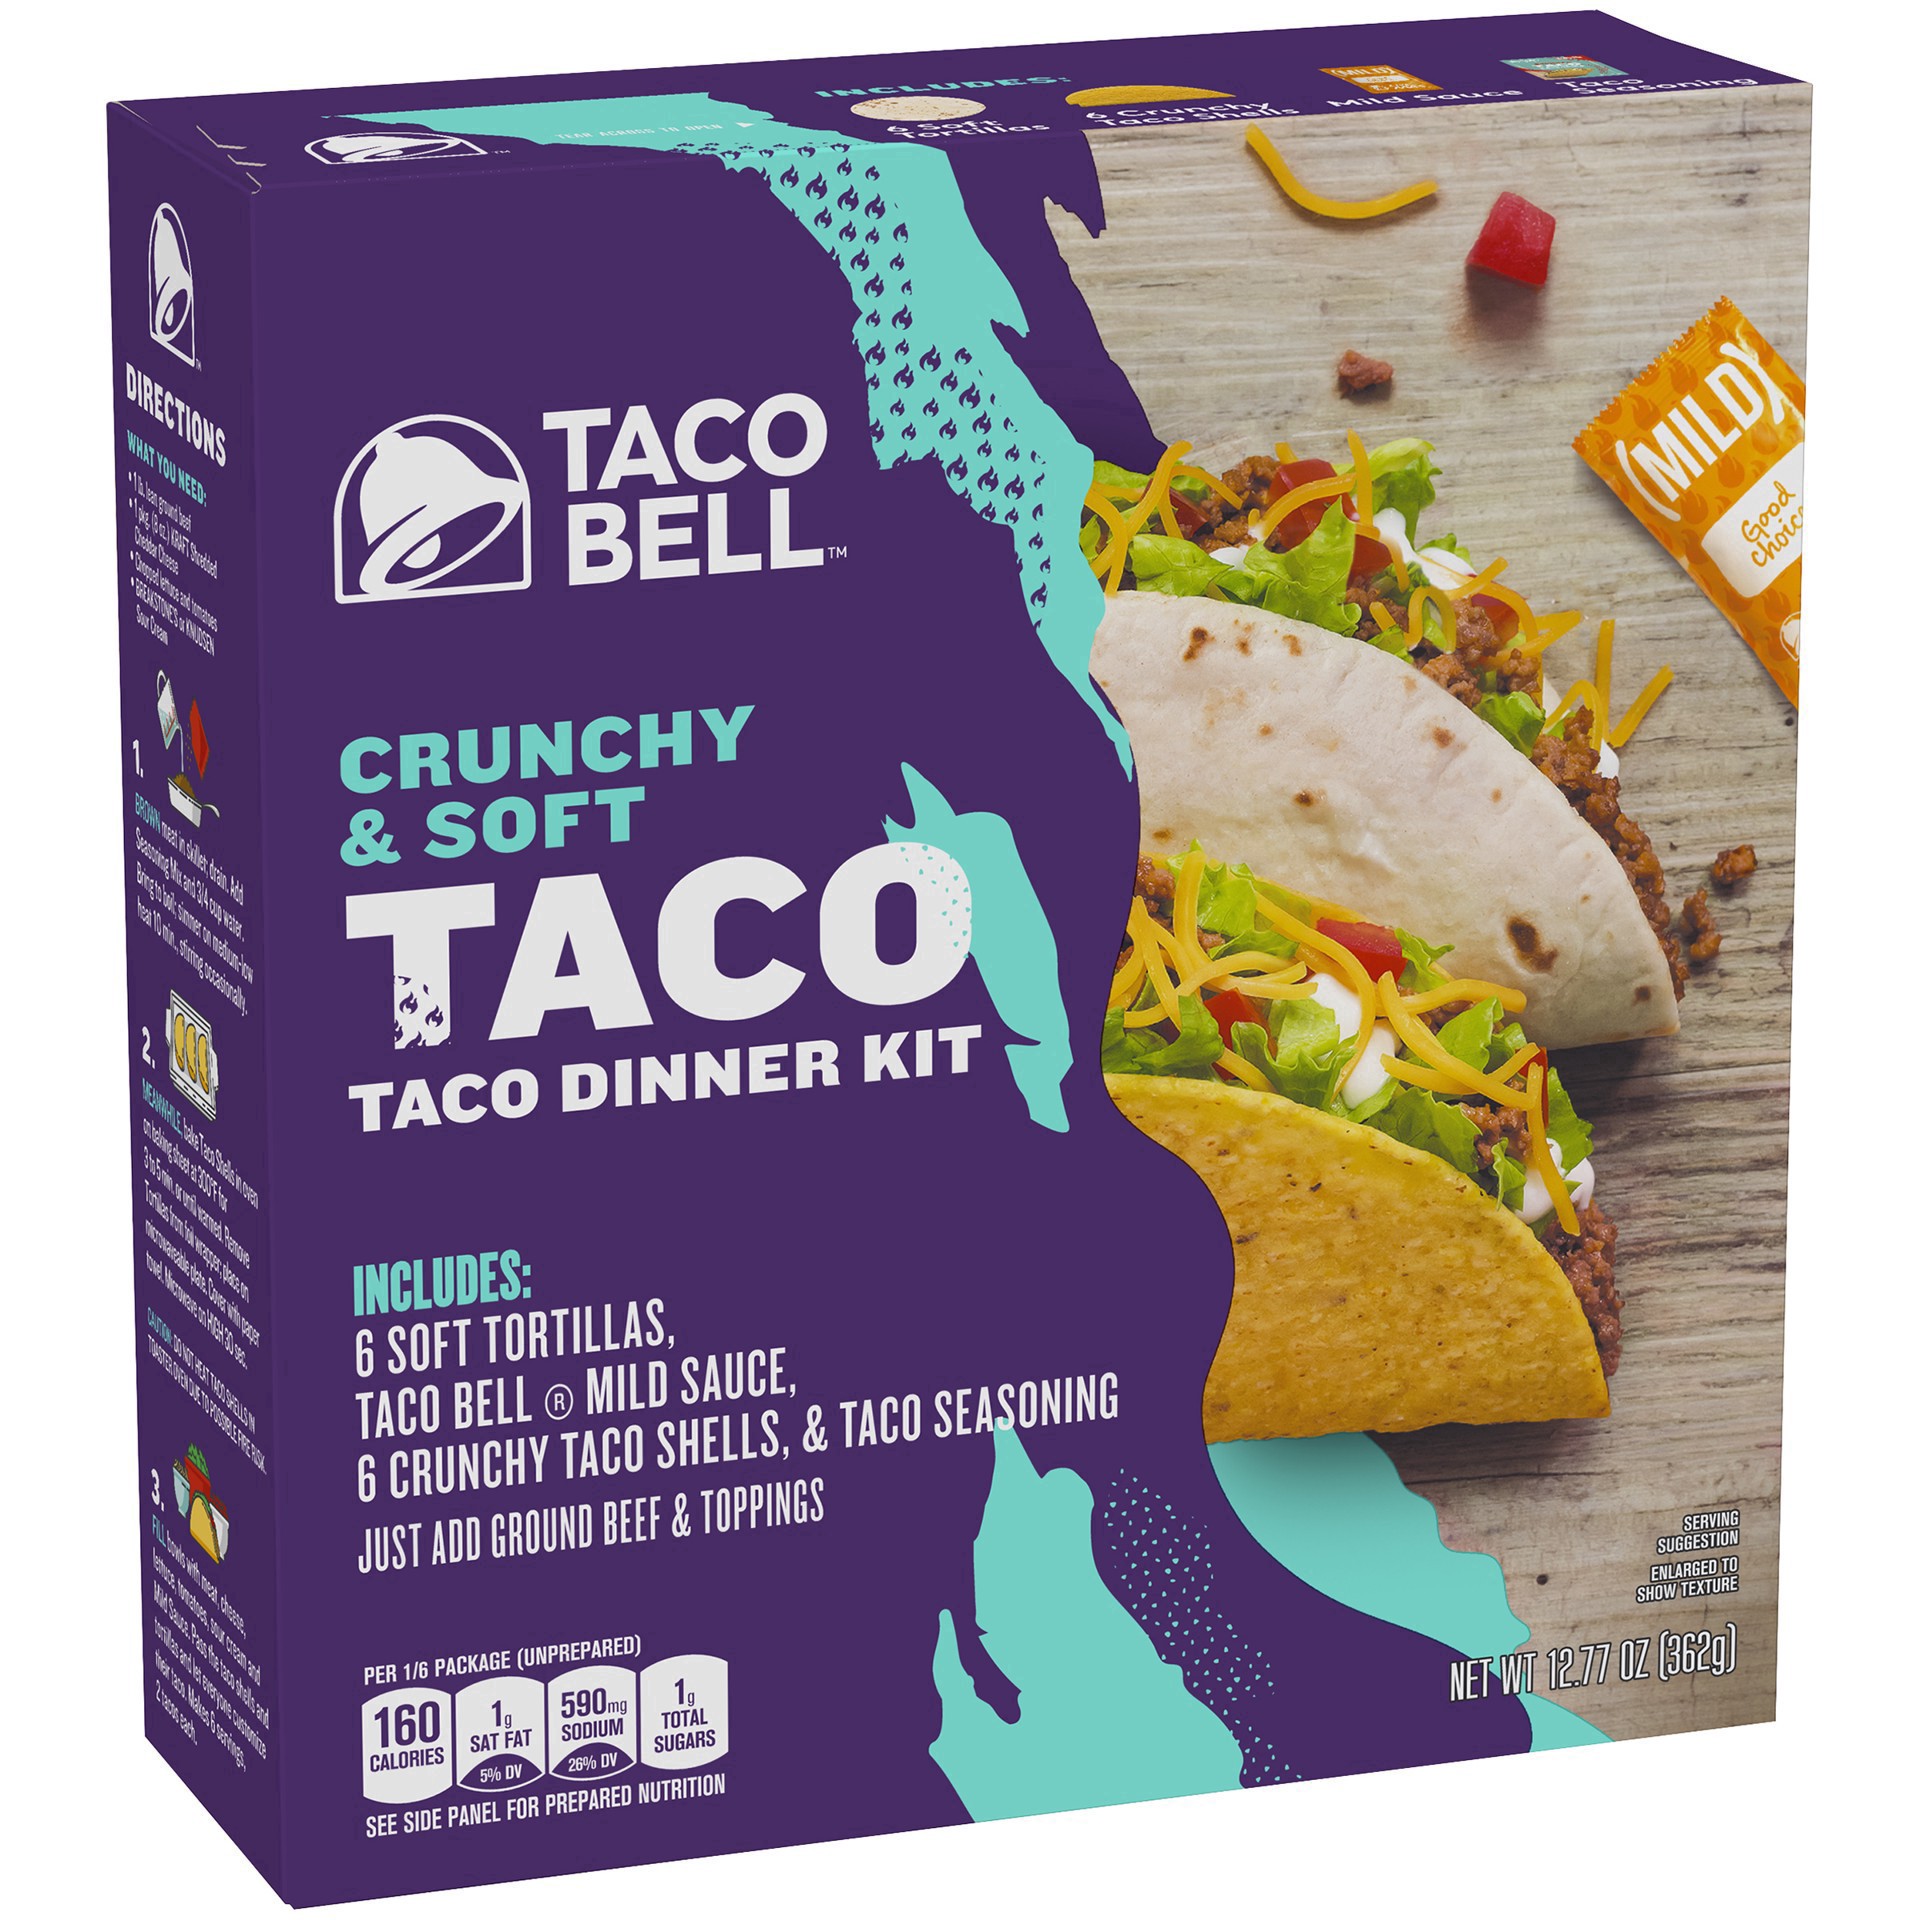 slide 64 of 101, Taco Bell Crunchy & Soft Taco Cravings Kit with 6 Soft Tortillas, 6 Crunchy Taco Shells, Taco Bell Mild Sauce & Seasoning, 12.77 oz Box, 1 ct